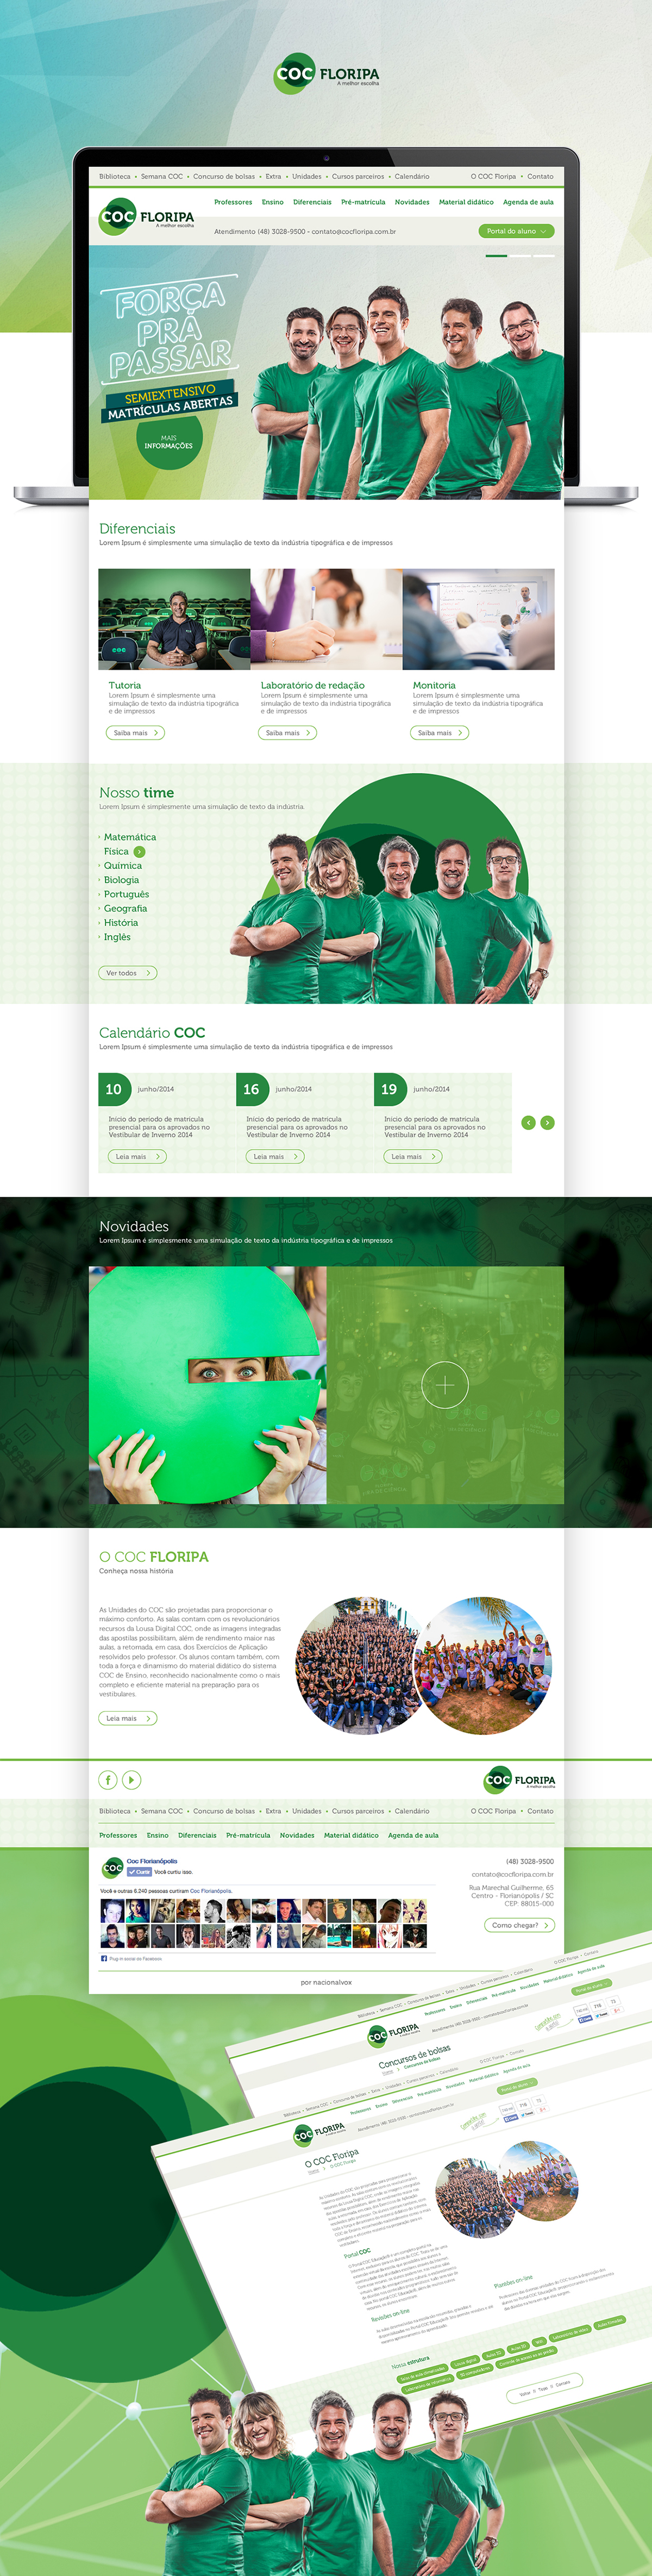 Website site webinspiration inspiration Webdesign COC design interfaces layouts